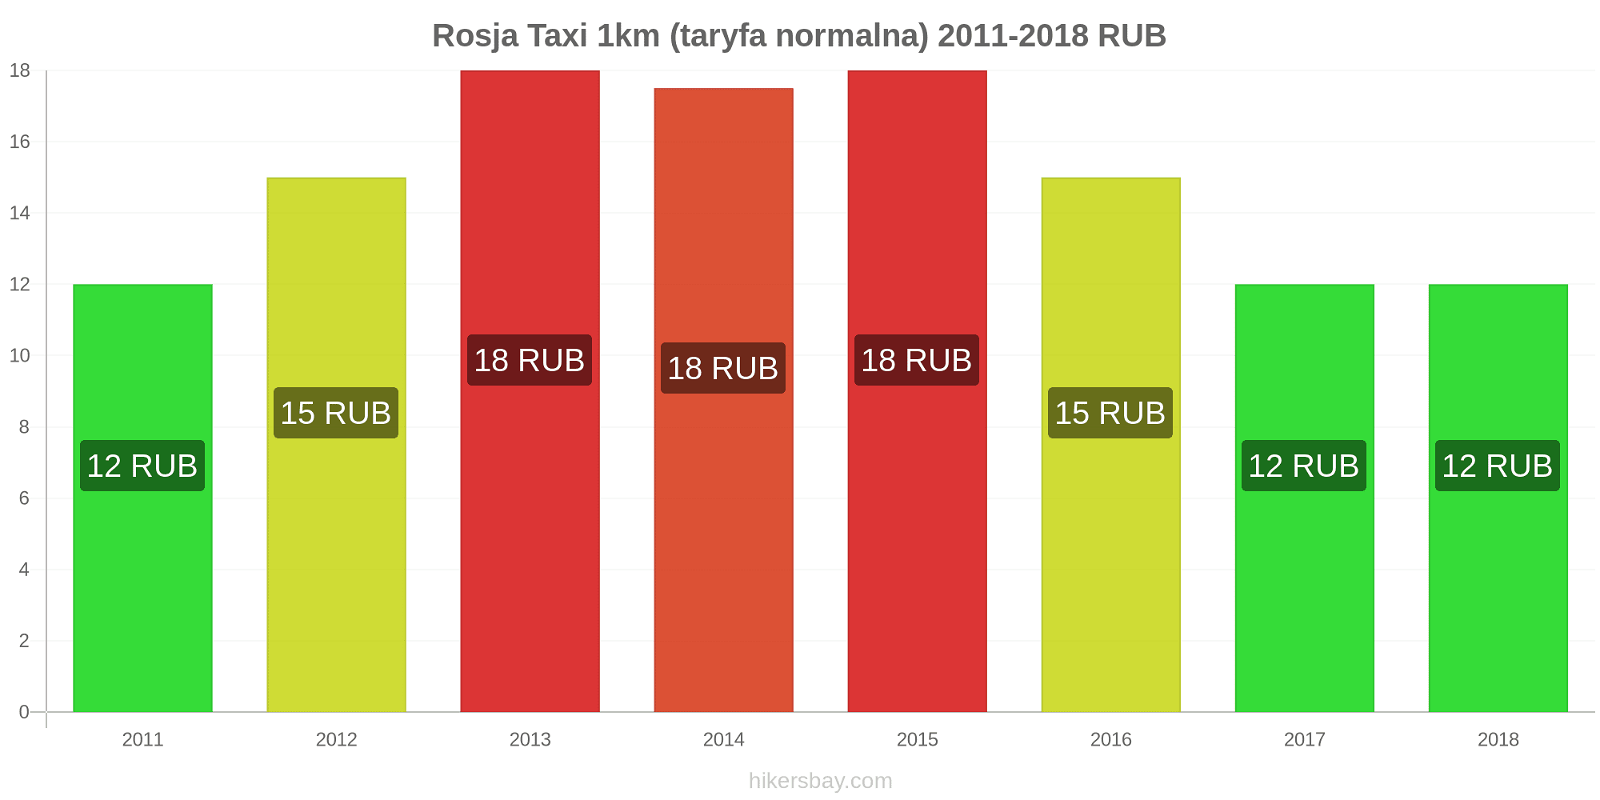 Rosja zmiany cen Taxi 1km (taryfa normalna) hikersbay.com